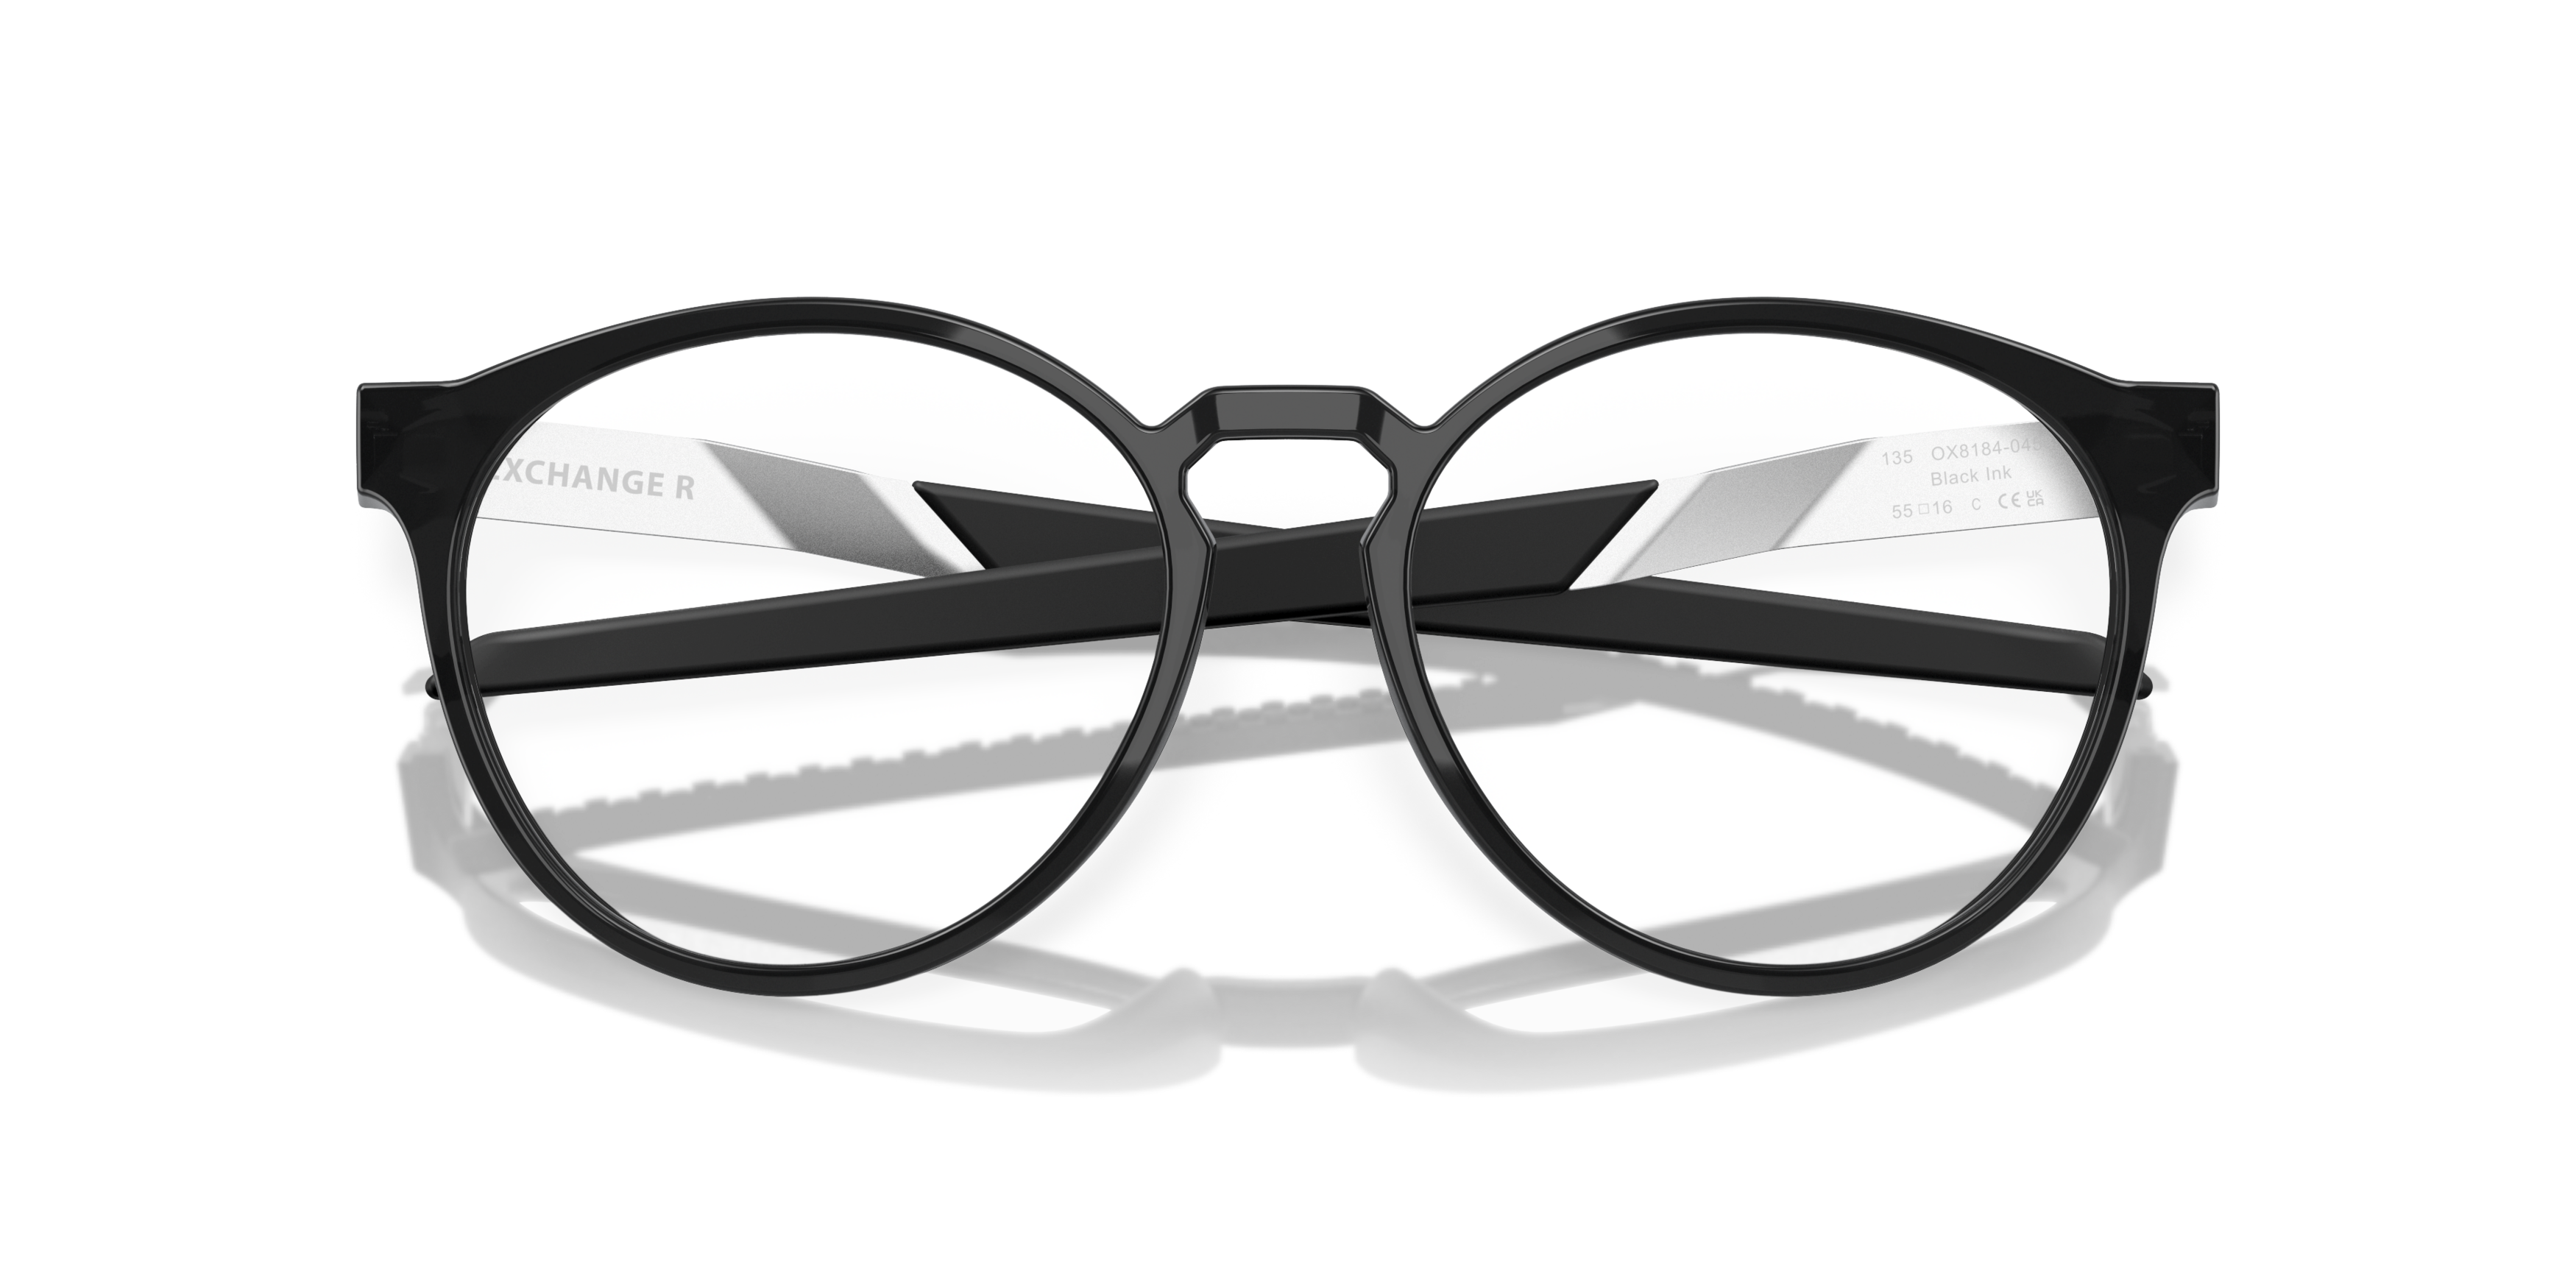 Folded Oakley OX 8184 Glasses Transparent / Black